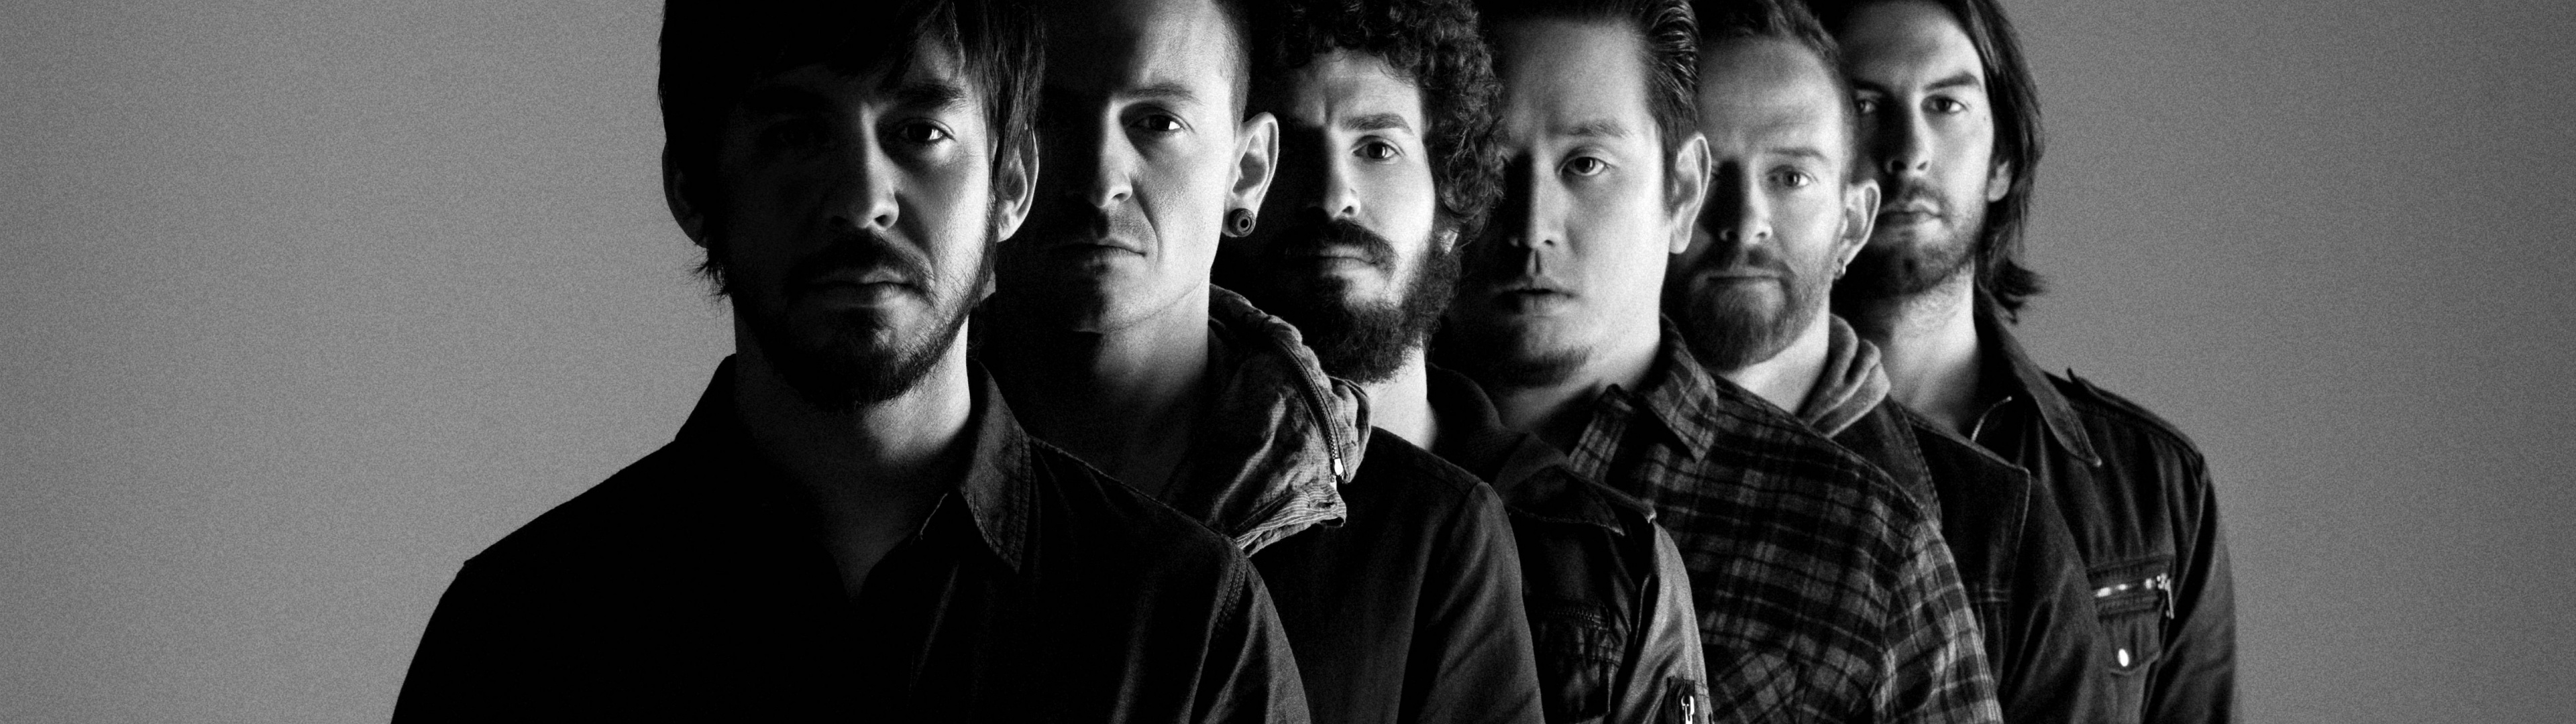 Download Linkin Park Wallpapers - Wallpapers For Your Desktop Wallpaper |  Wallpapers.com